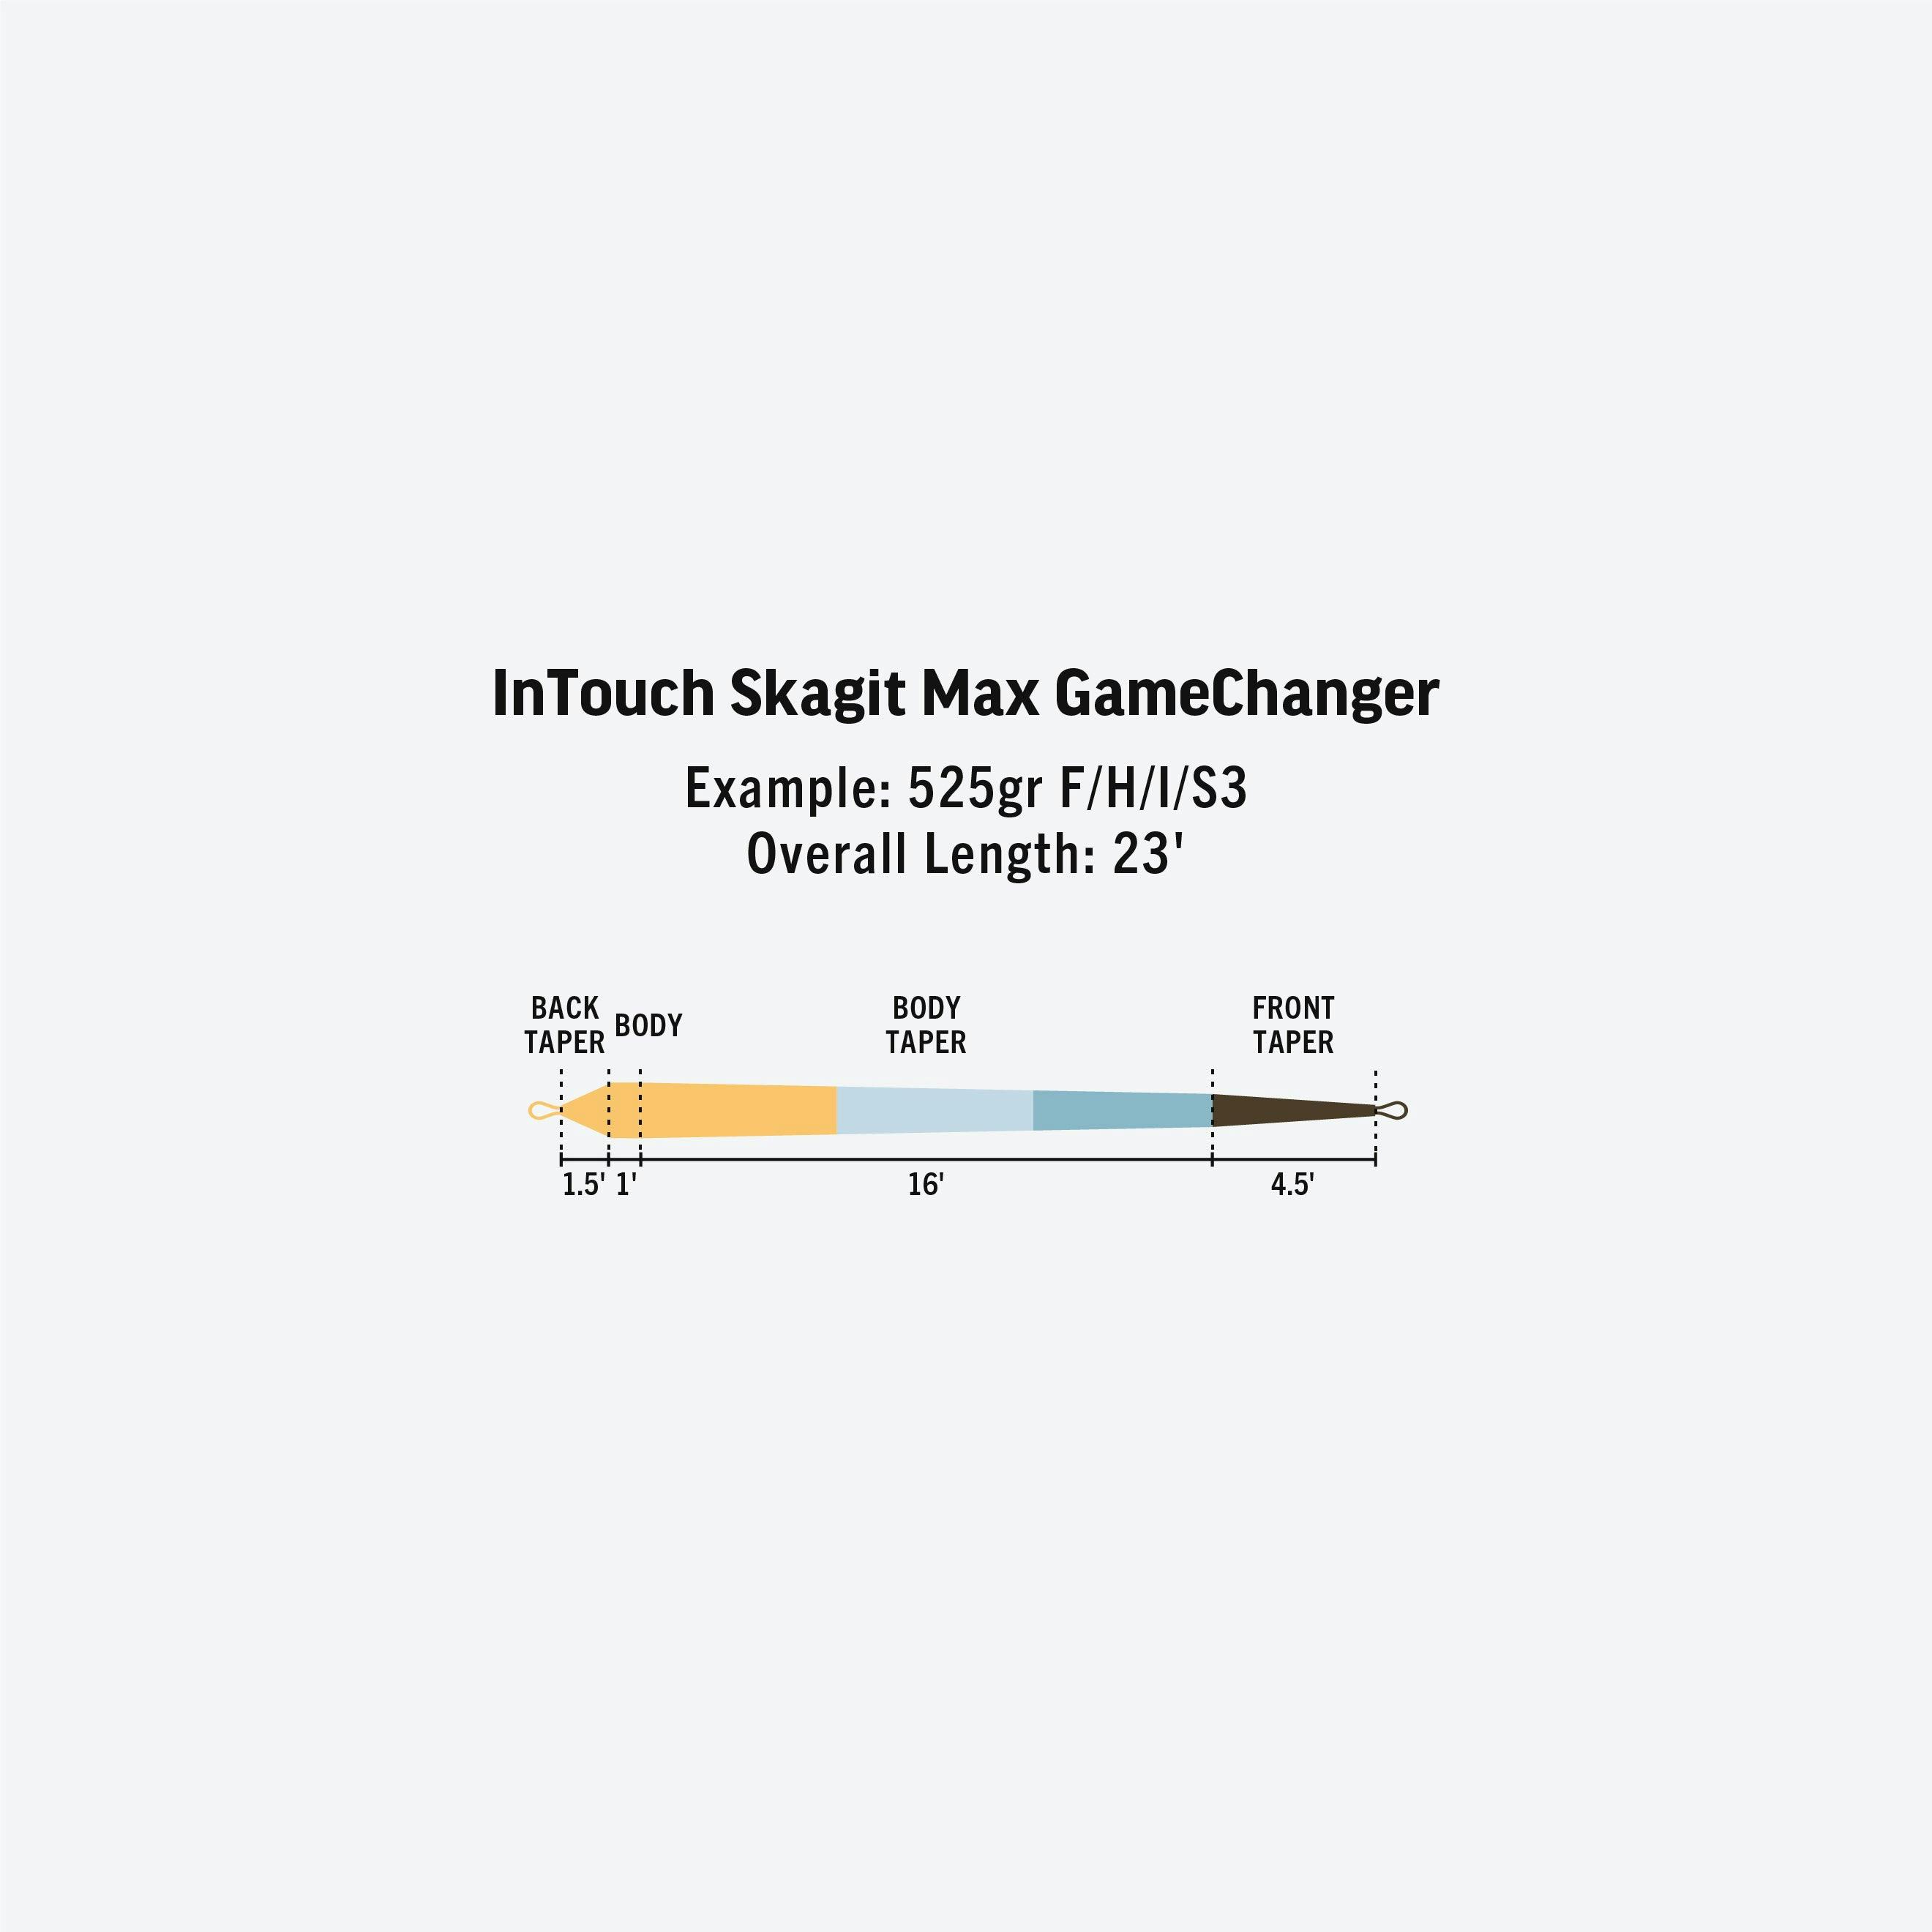 Rio InTouch Skagit Max GameChanger Fly Line · Shooting · 5wt · Sinking · Brown - Dark Aqua - Orange